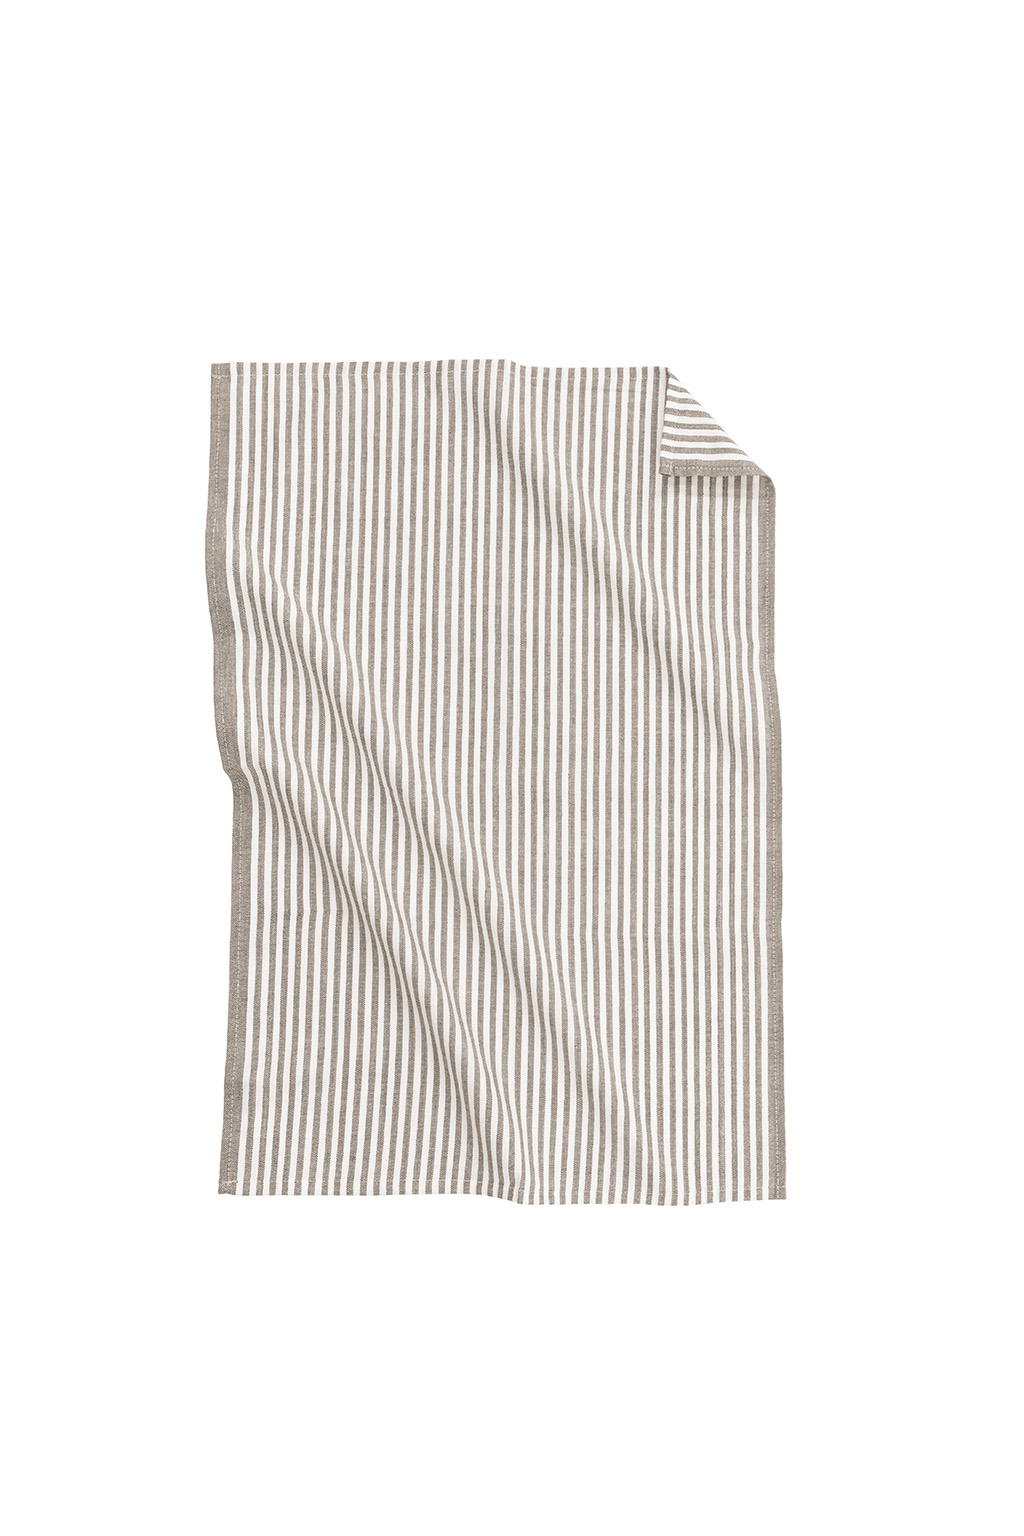 Keukenhanddoek XL-LINES set/3 (stripes/waffle/check), taupe